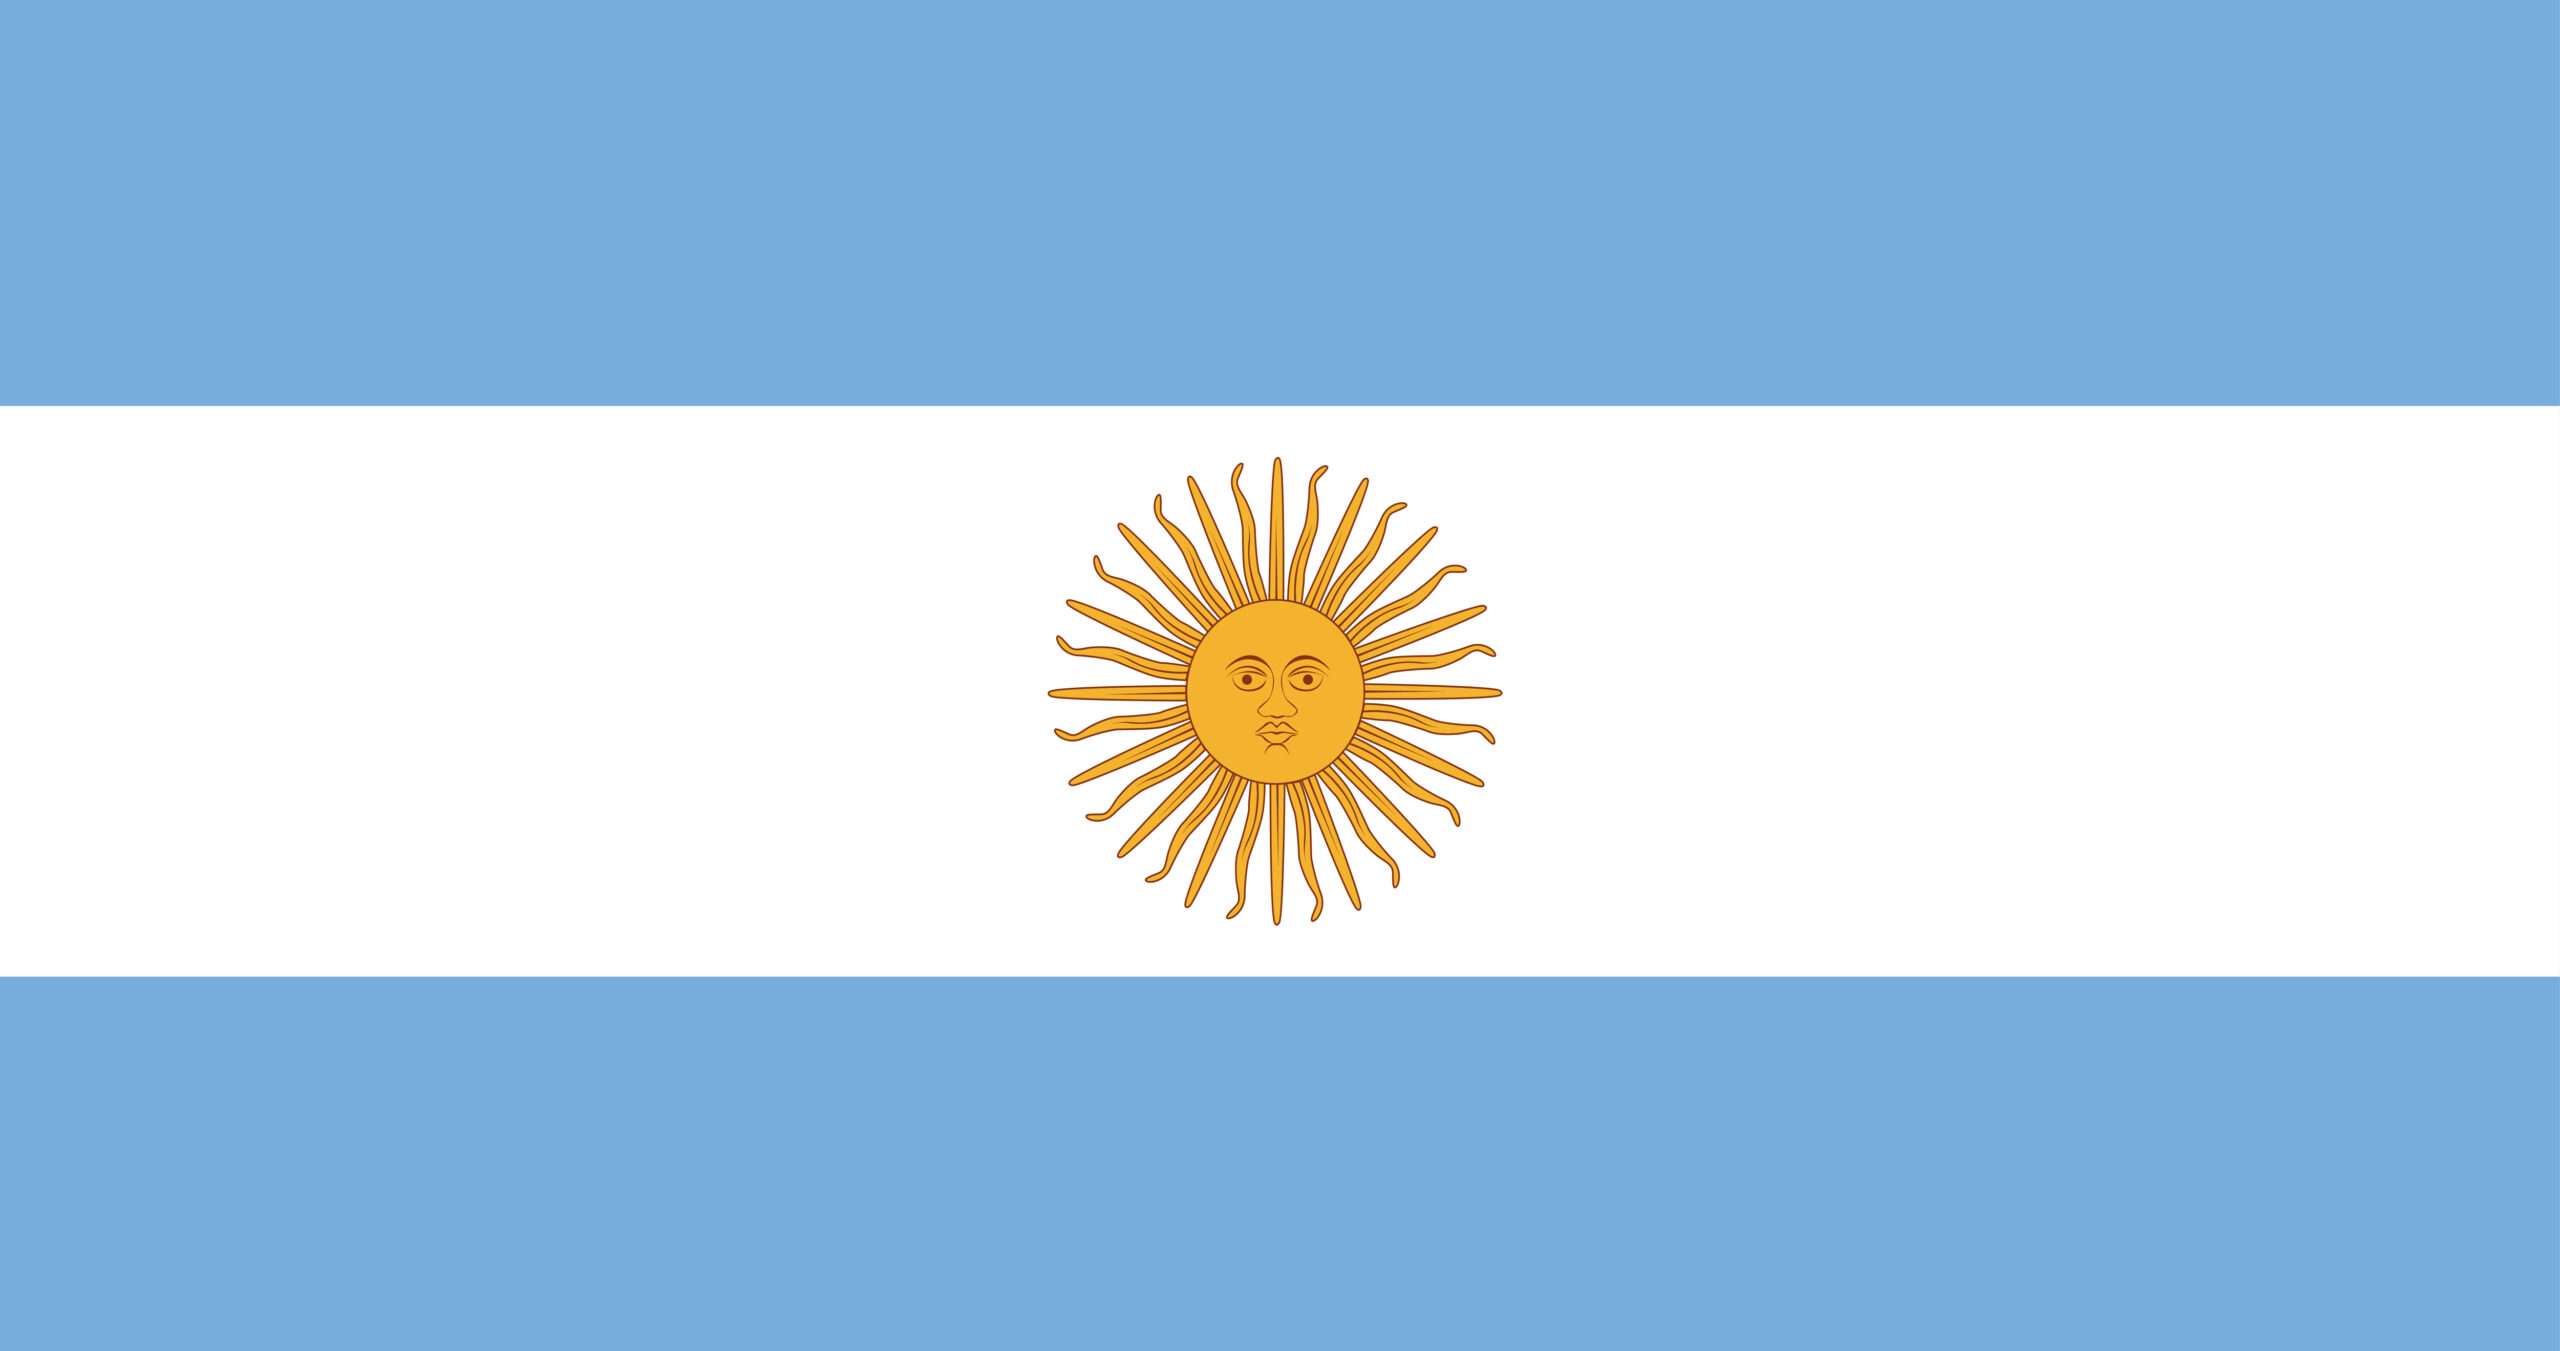 Illustration of Argentina flag